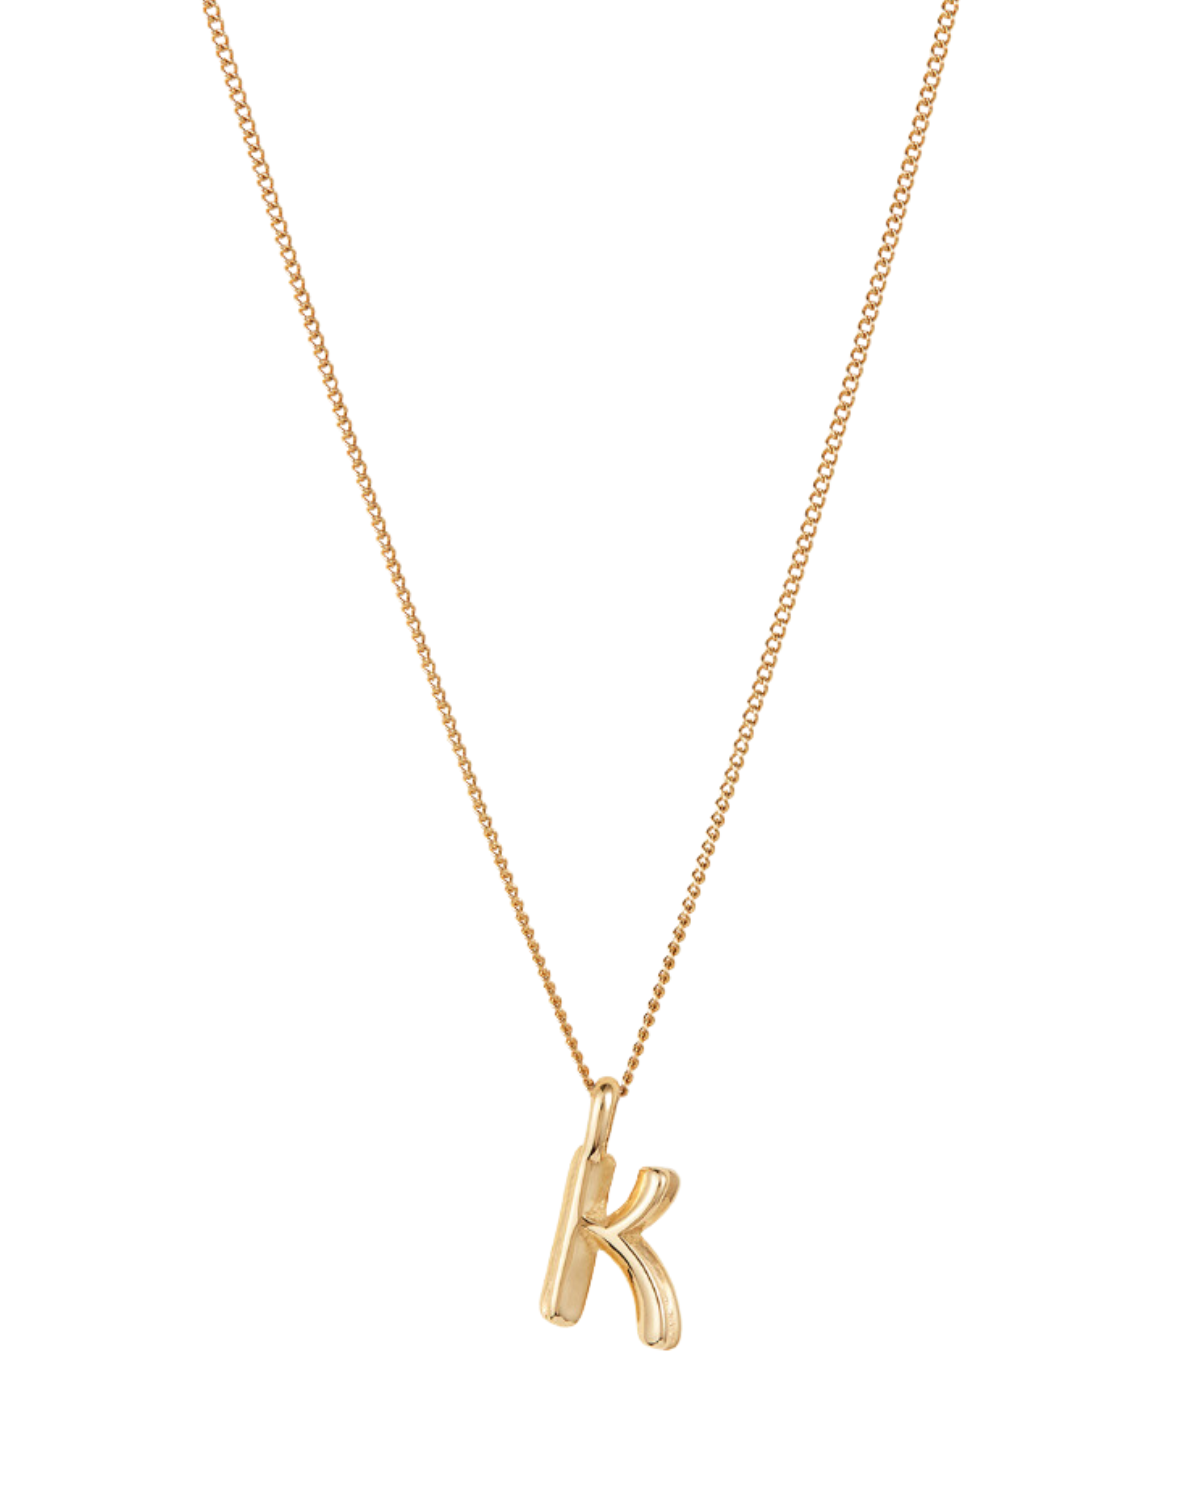 Monogram Necklace - K (Gold)